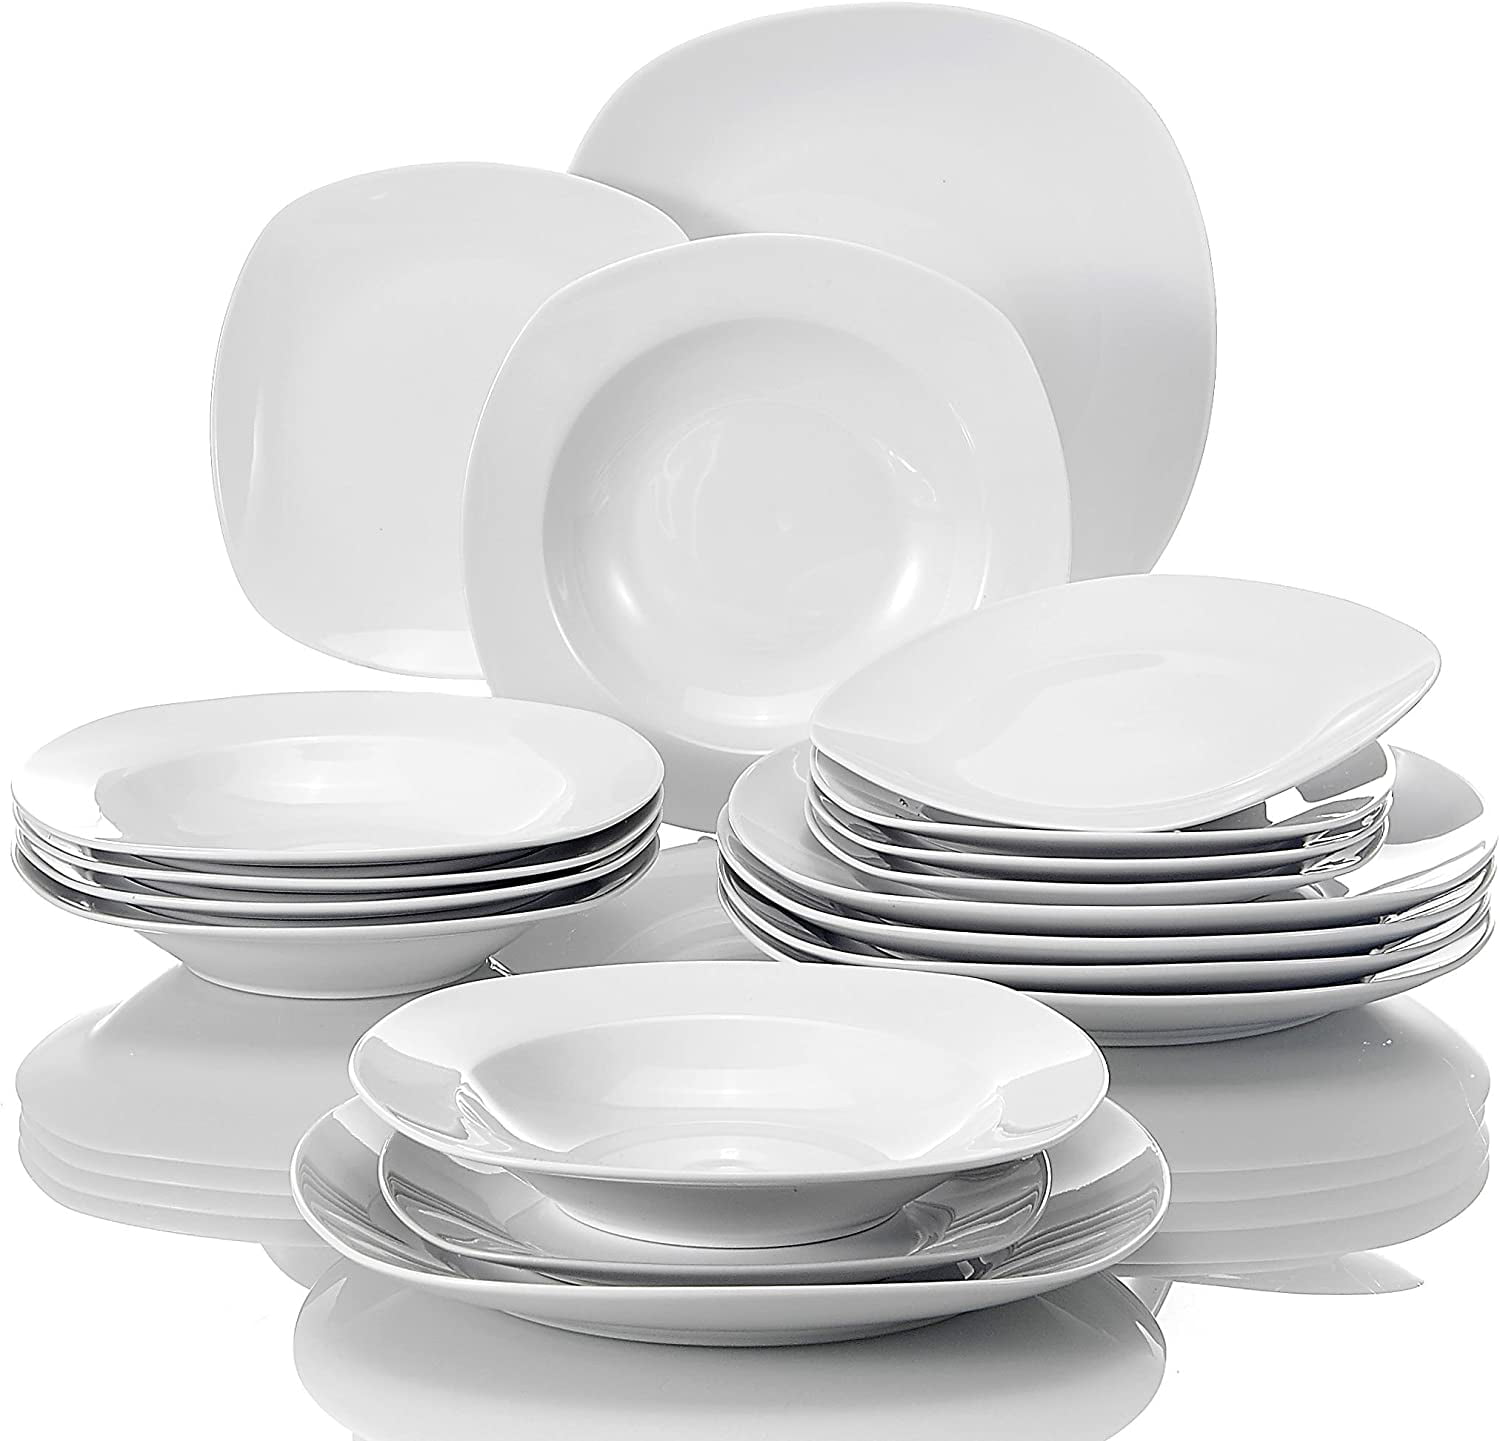 18-Piece Dinner Set Ivory White Porcelain Dinner Plate Sets with 6-Piece Dinner Plates 6-Piece Soup Plates and 6-Piece Dessert Plates Service for 6